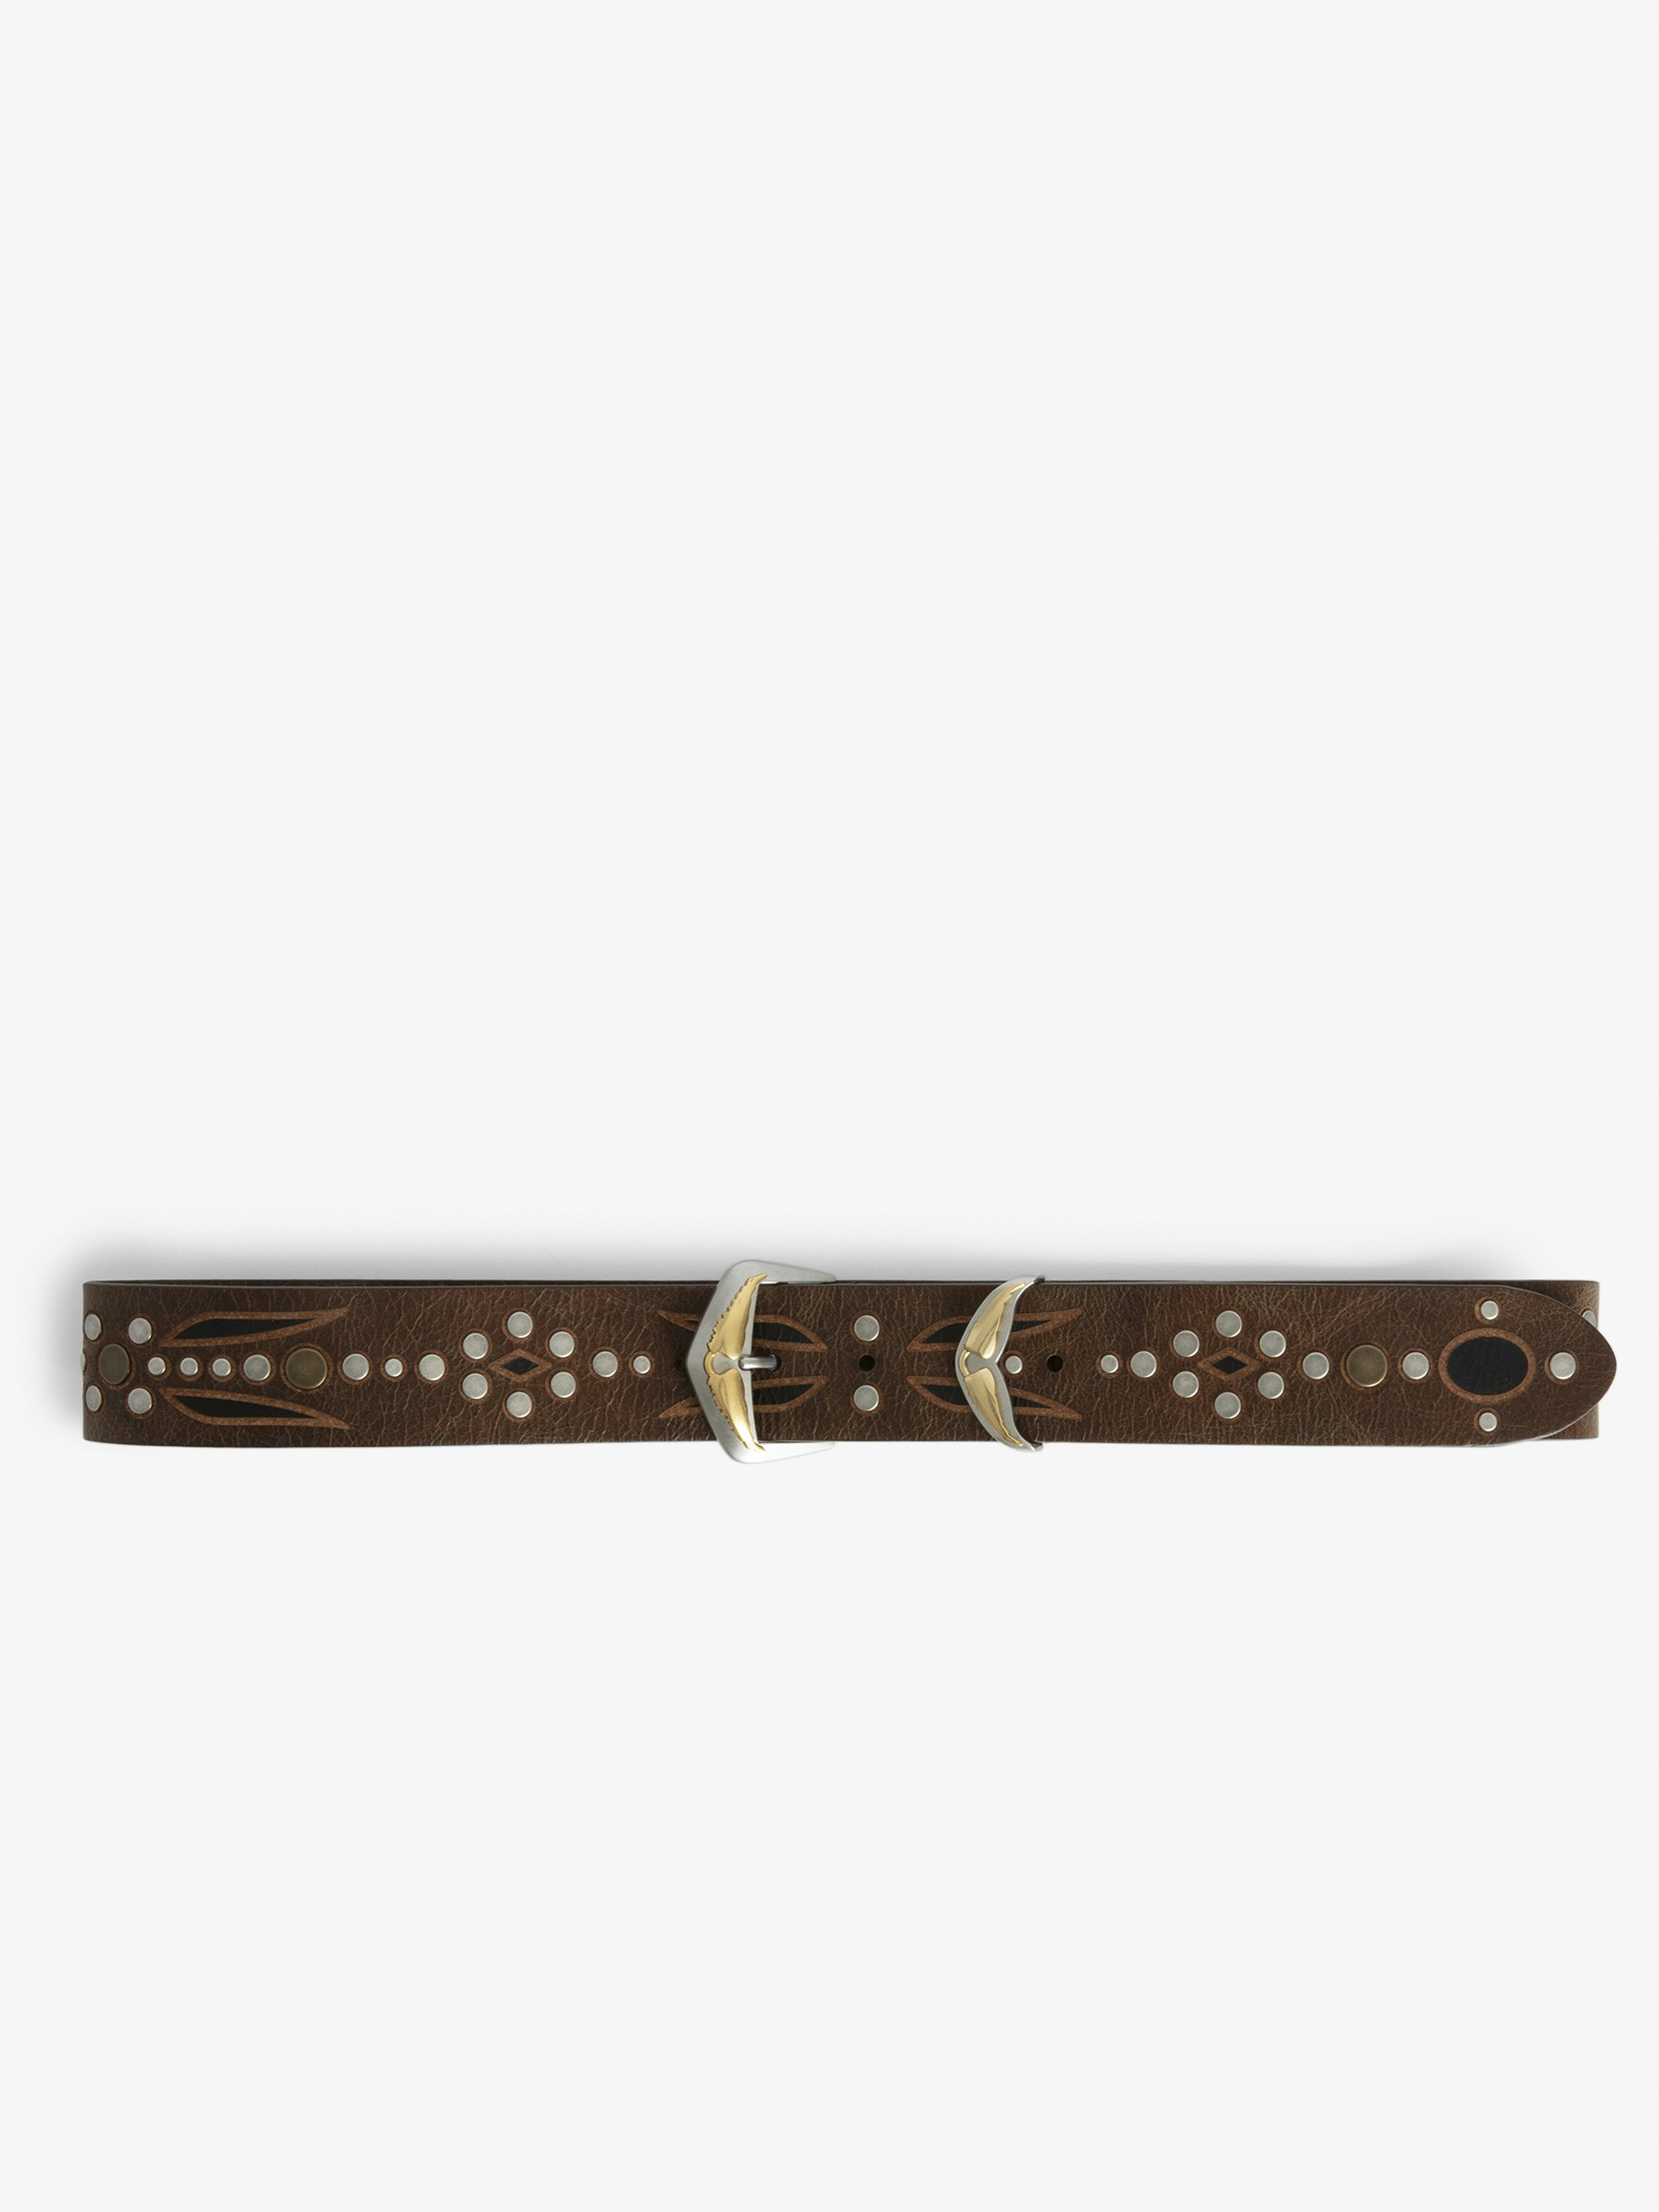 Jane Belt - Brown vintage leather belt embellished with engraved motifs, studs and signature wing buckle.